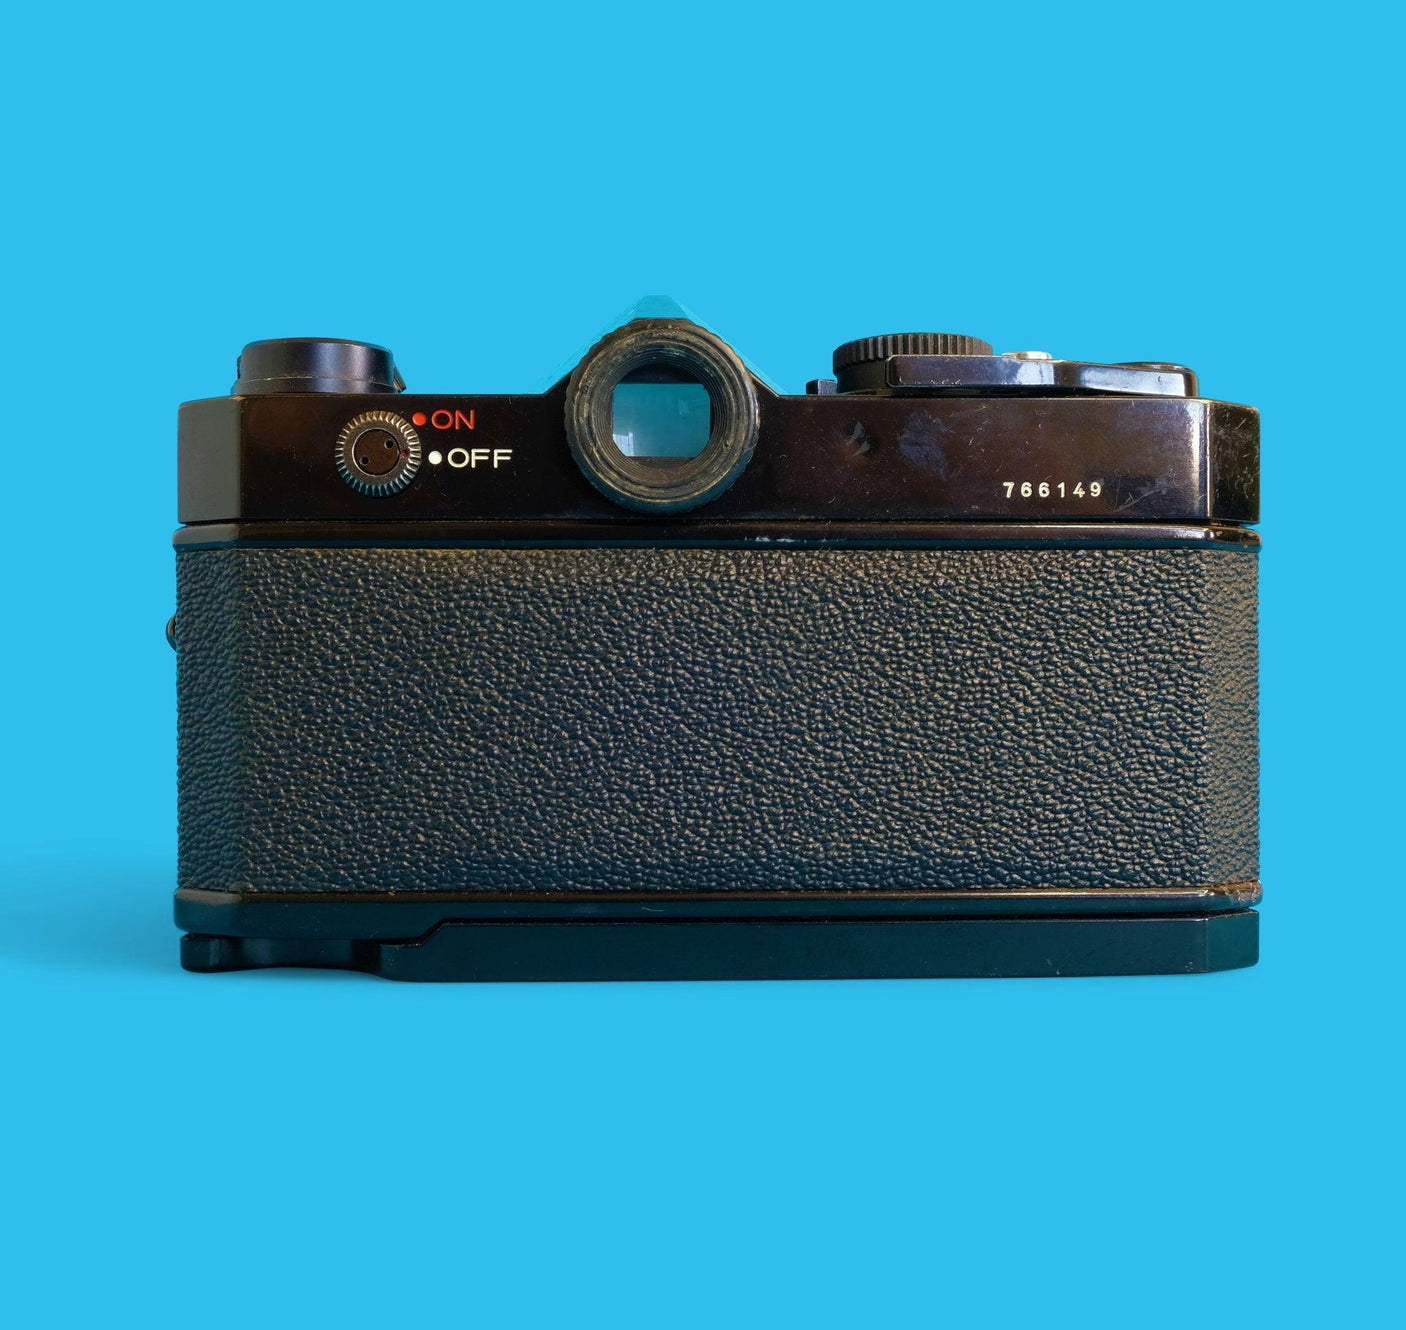 Konica Autoreflex T Vintage SLR 35mm Film Camera with Konica f/1.8 50mm Lens